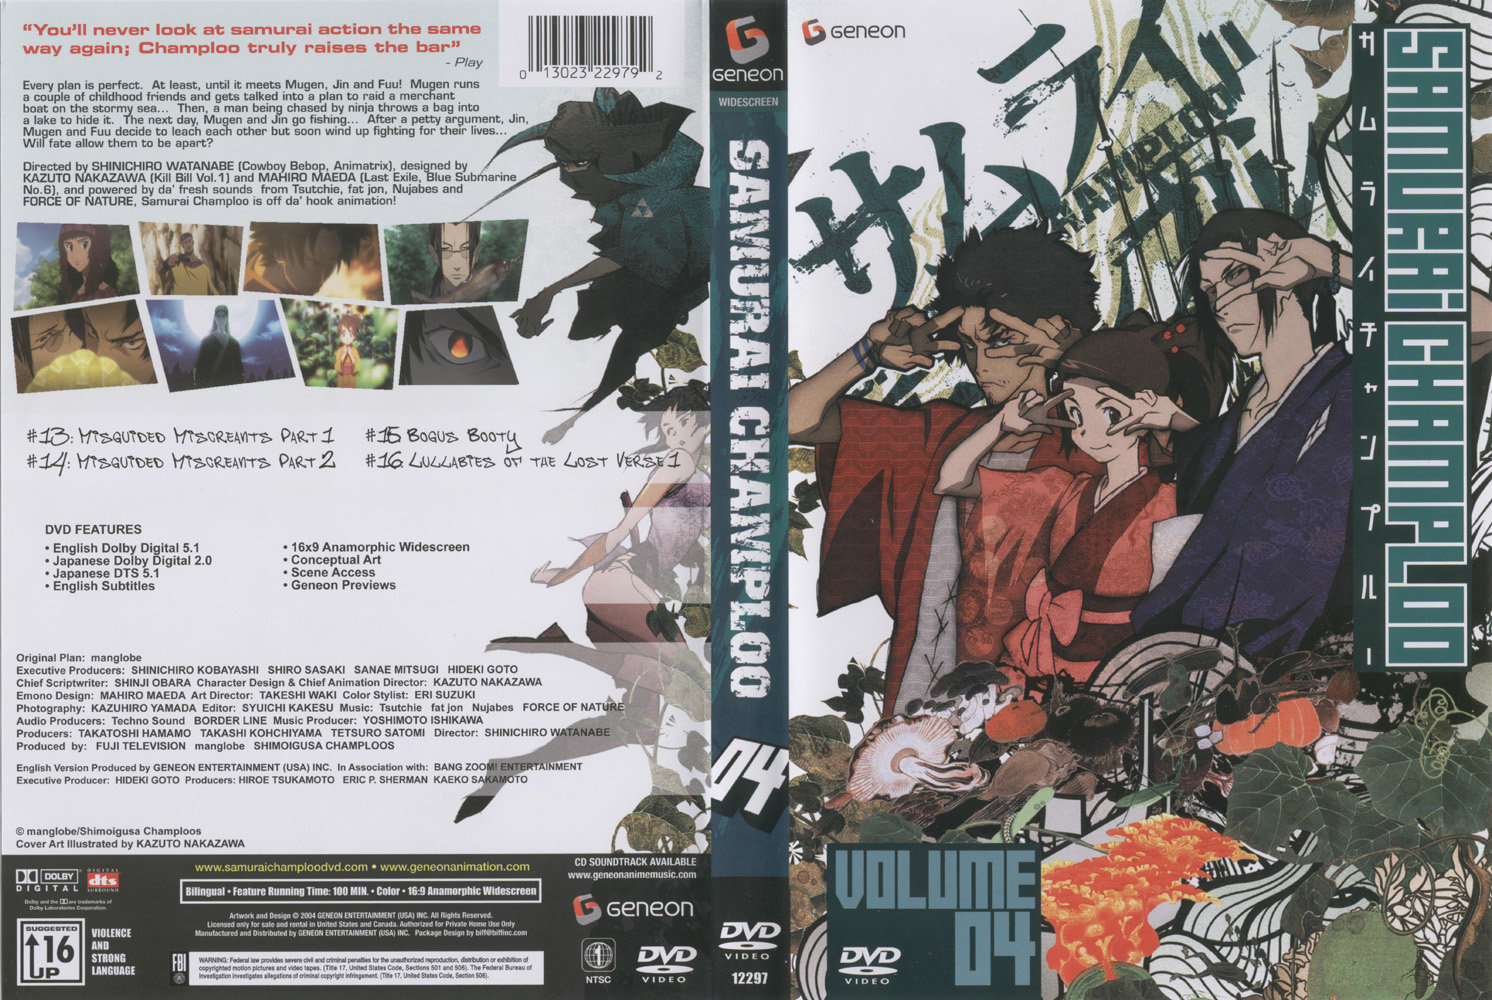 Jaquette DVD Samurai champloo vol 04 Zone 1